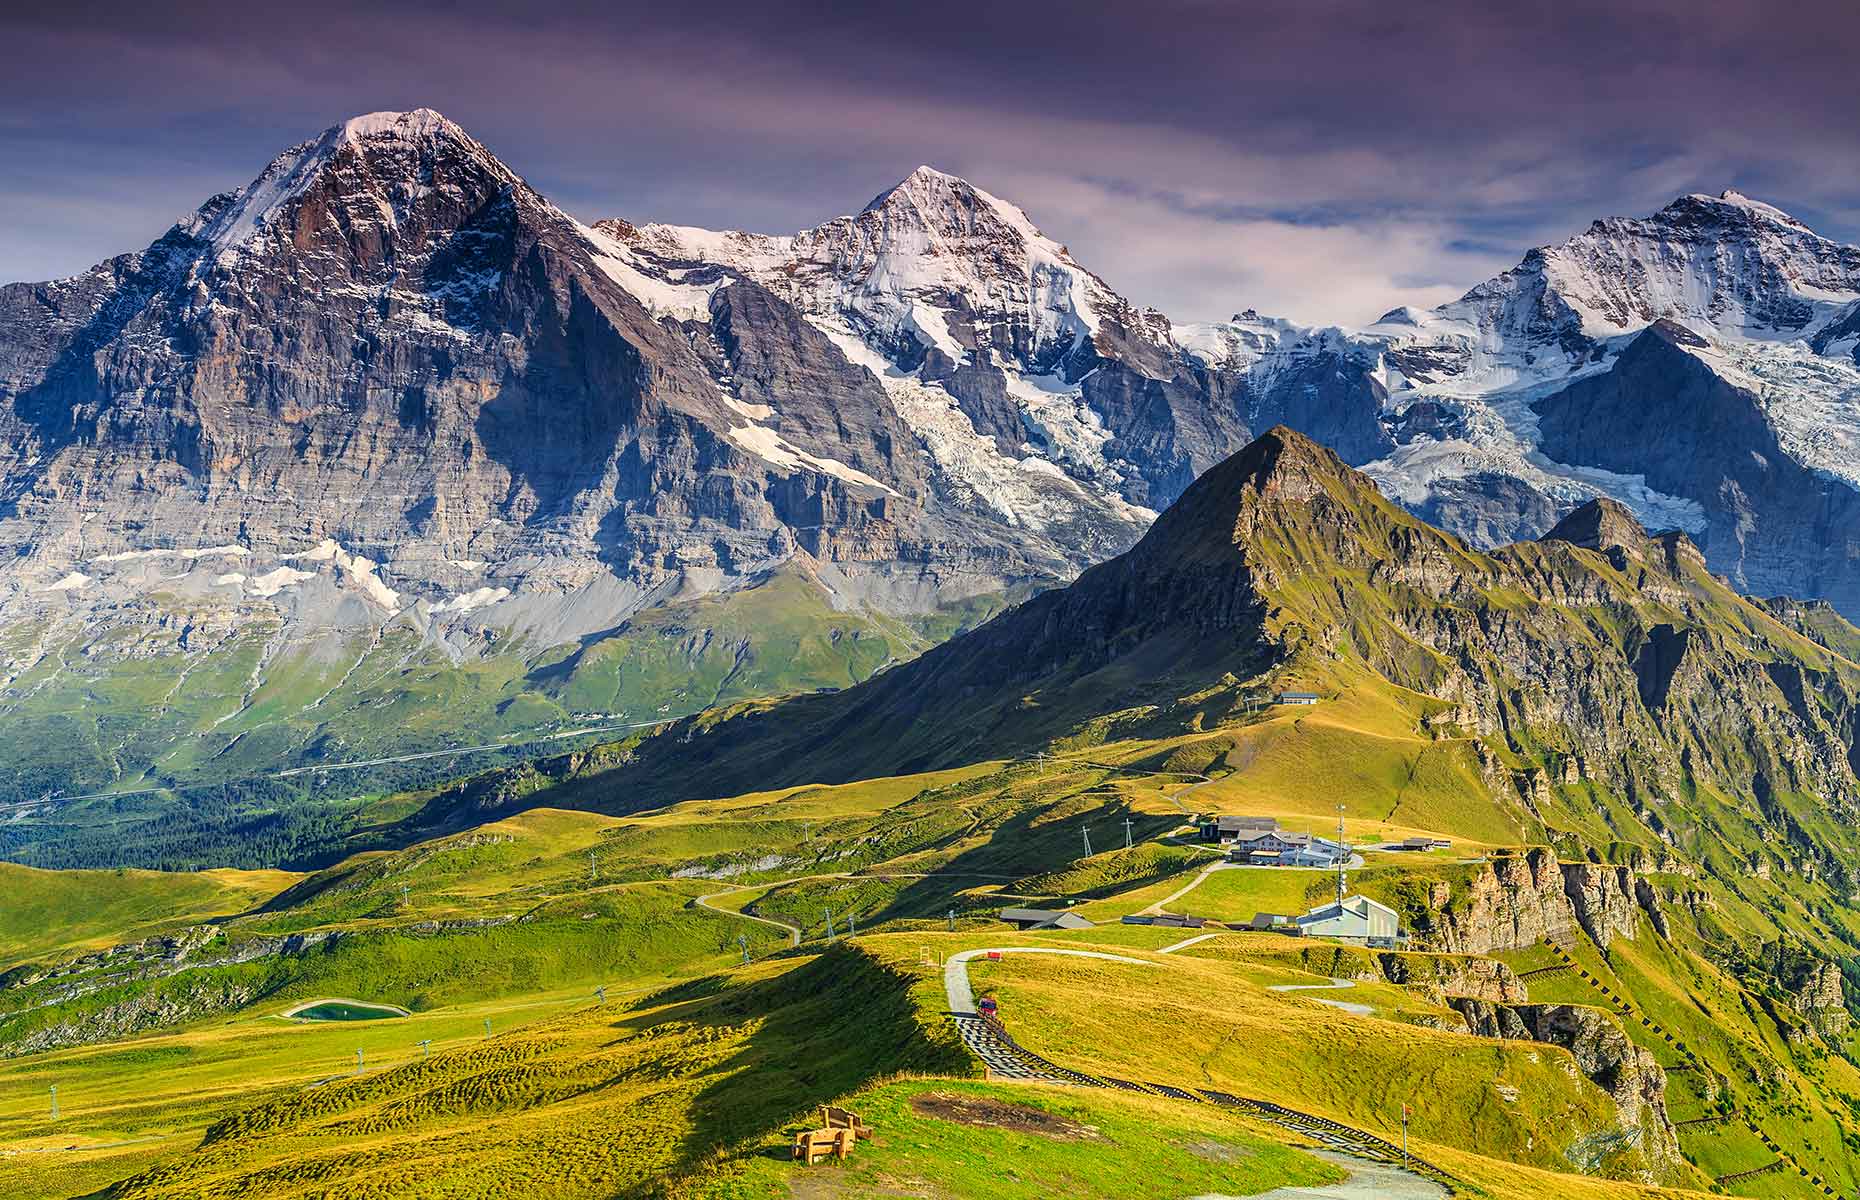 Jungfrau landscape (Image: Gasper Janos/Shutterstock)